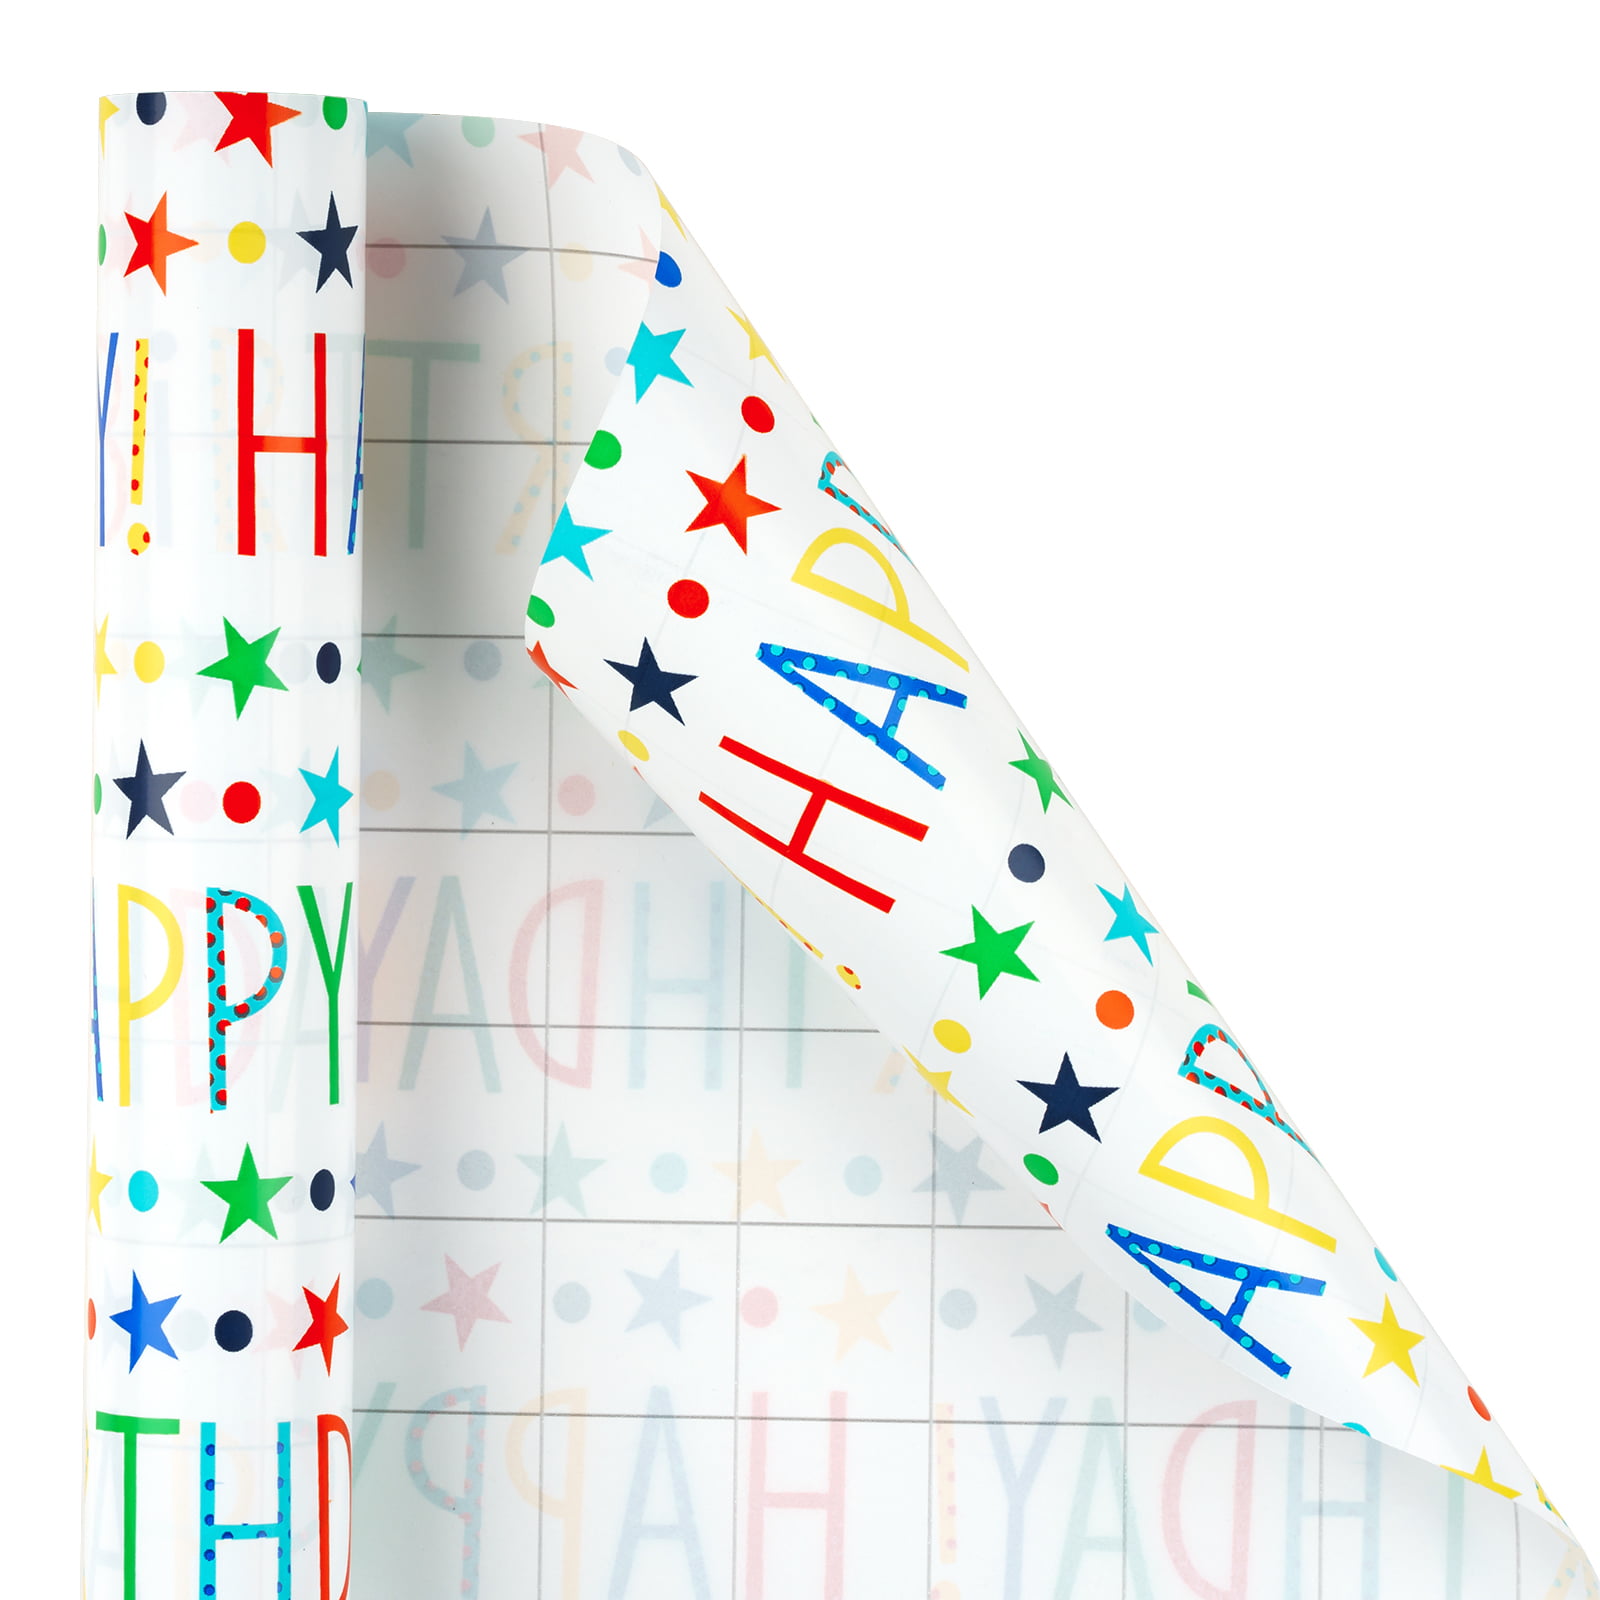 MAYPLUSS Birthday Wrapping Paper Roll - Mini Roll - 17.3 Inch X 32.8 Feet -  Pink Design - Colorful Hat/Birthday Text (47.3 sq.ft.ttl)